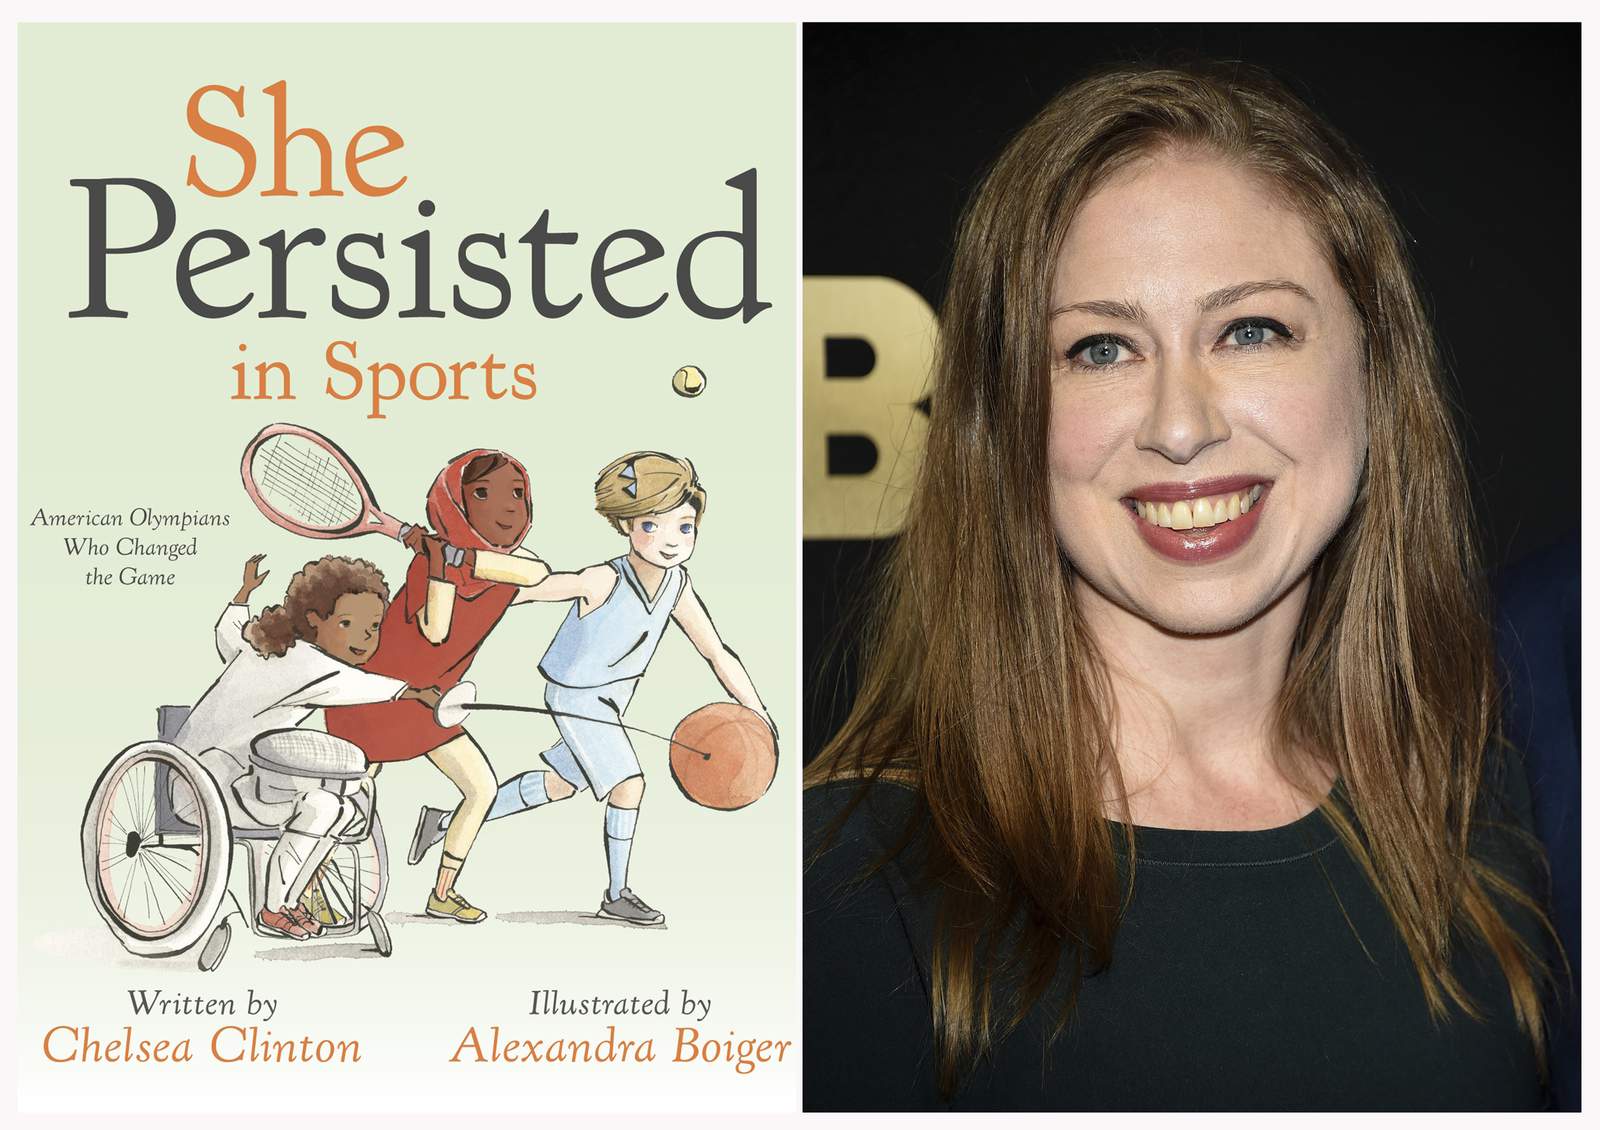 Chelsea Clinton's next book celebrates women in sports